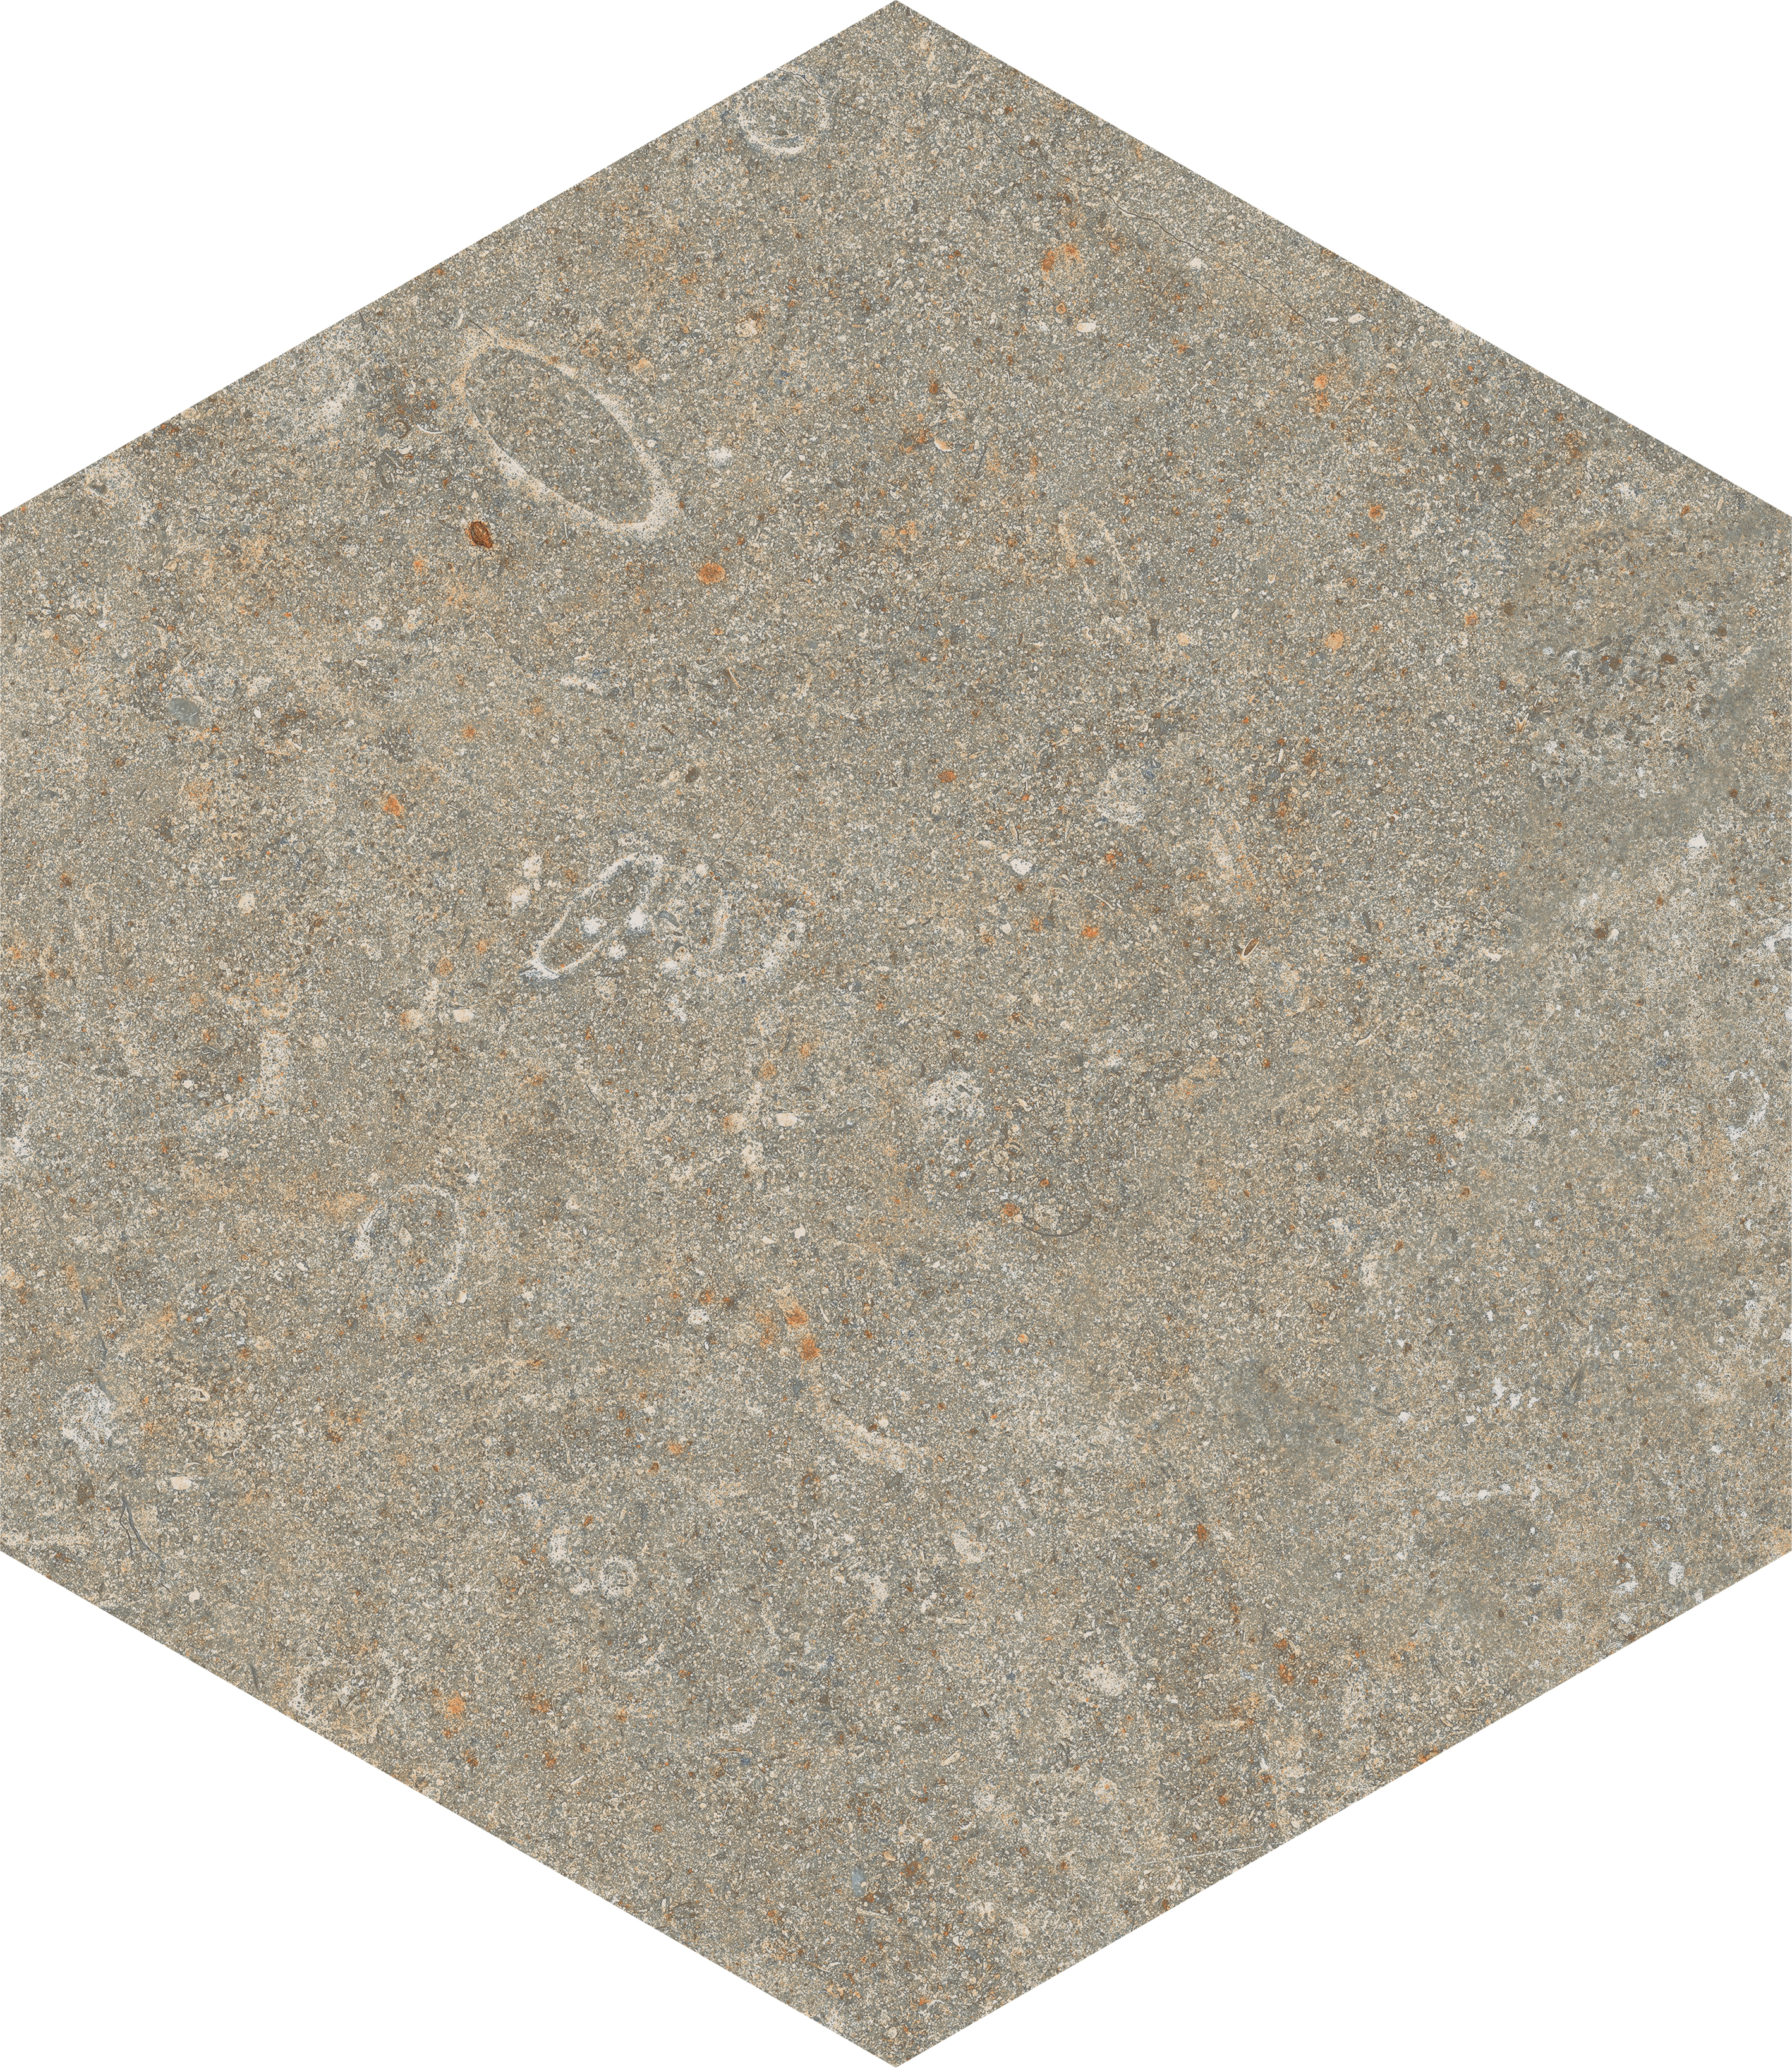 Marca Corona Arkistyle Fossil Naturale – Matt Esagona J159 naturale – matt 21,6x25cm 9mm